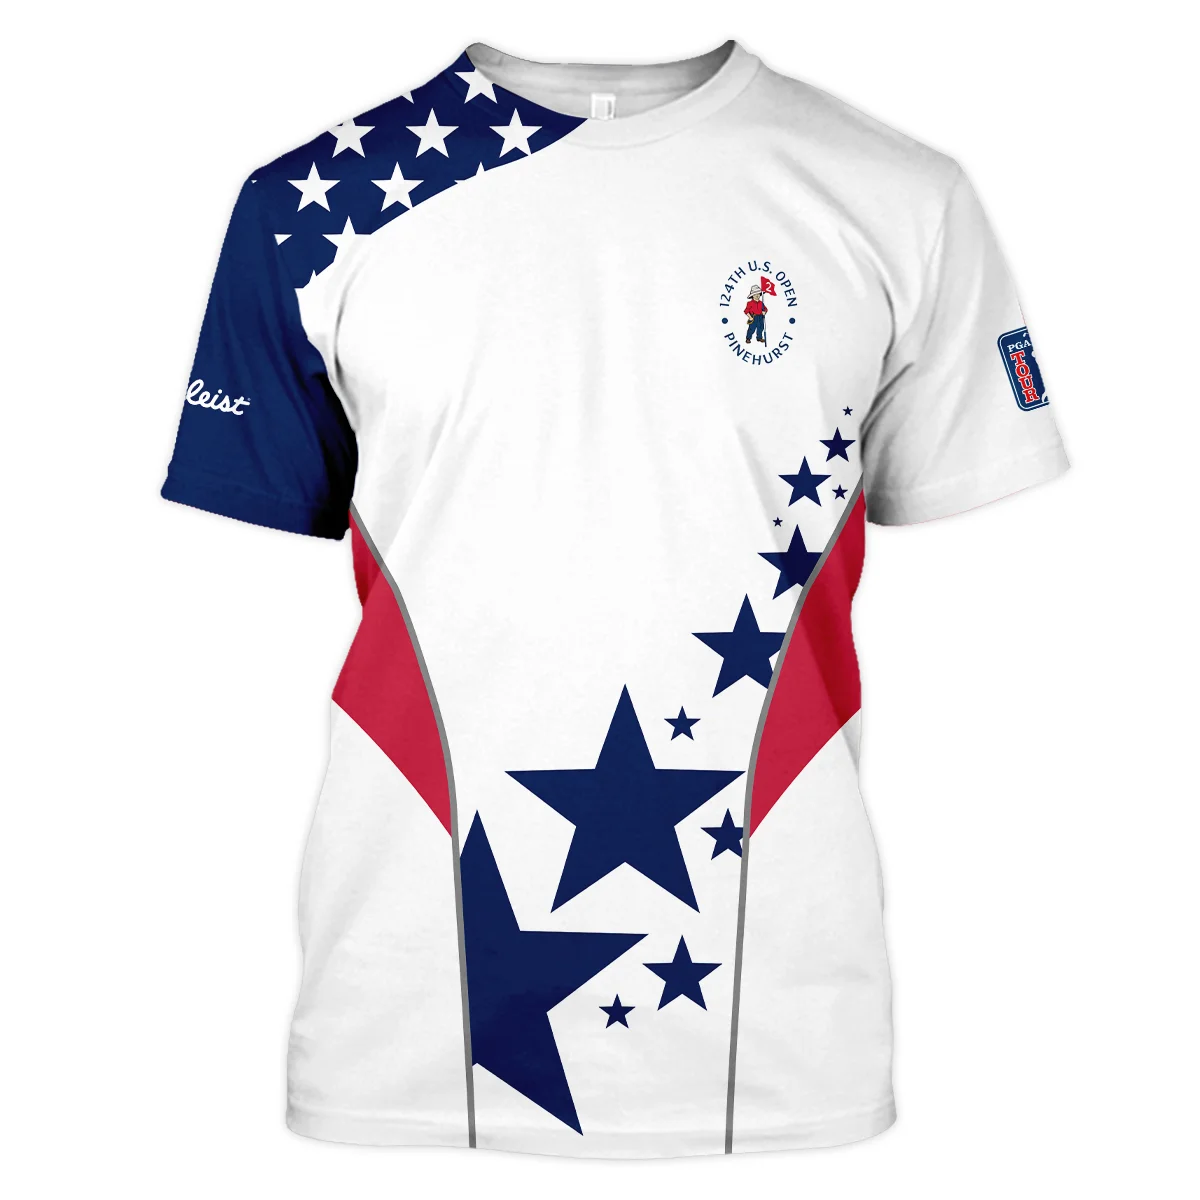 124th U.S. Open Pinehurst Titleist Stars US Flag White Blue Polo Shirt Style Classic Polo Shirt For Men